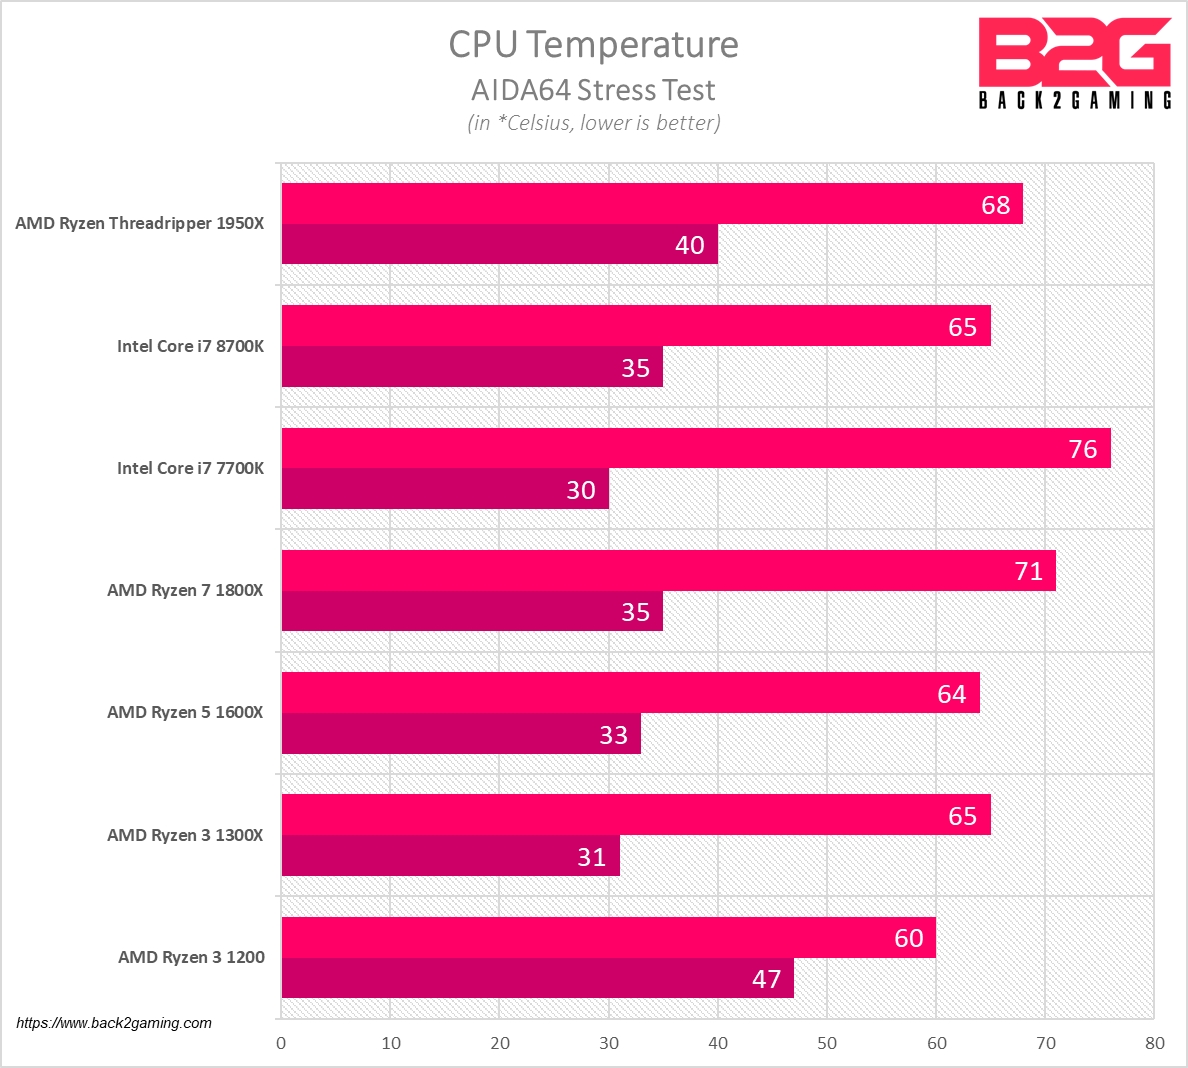 AMD Ryzen 3 1200 and Ryzen 3 1300X Quad-Core Processor Review -